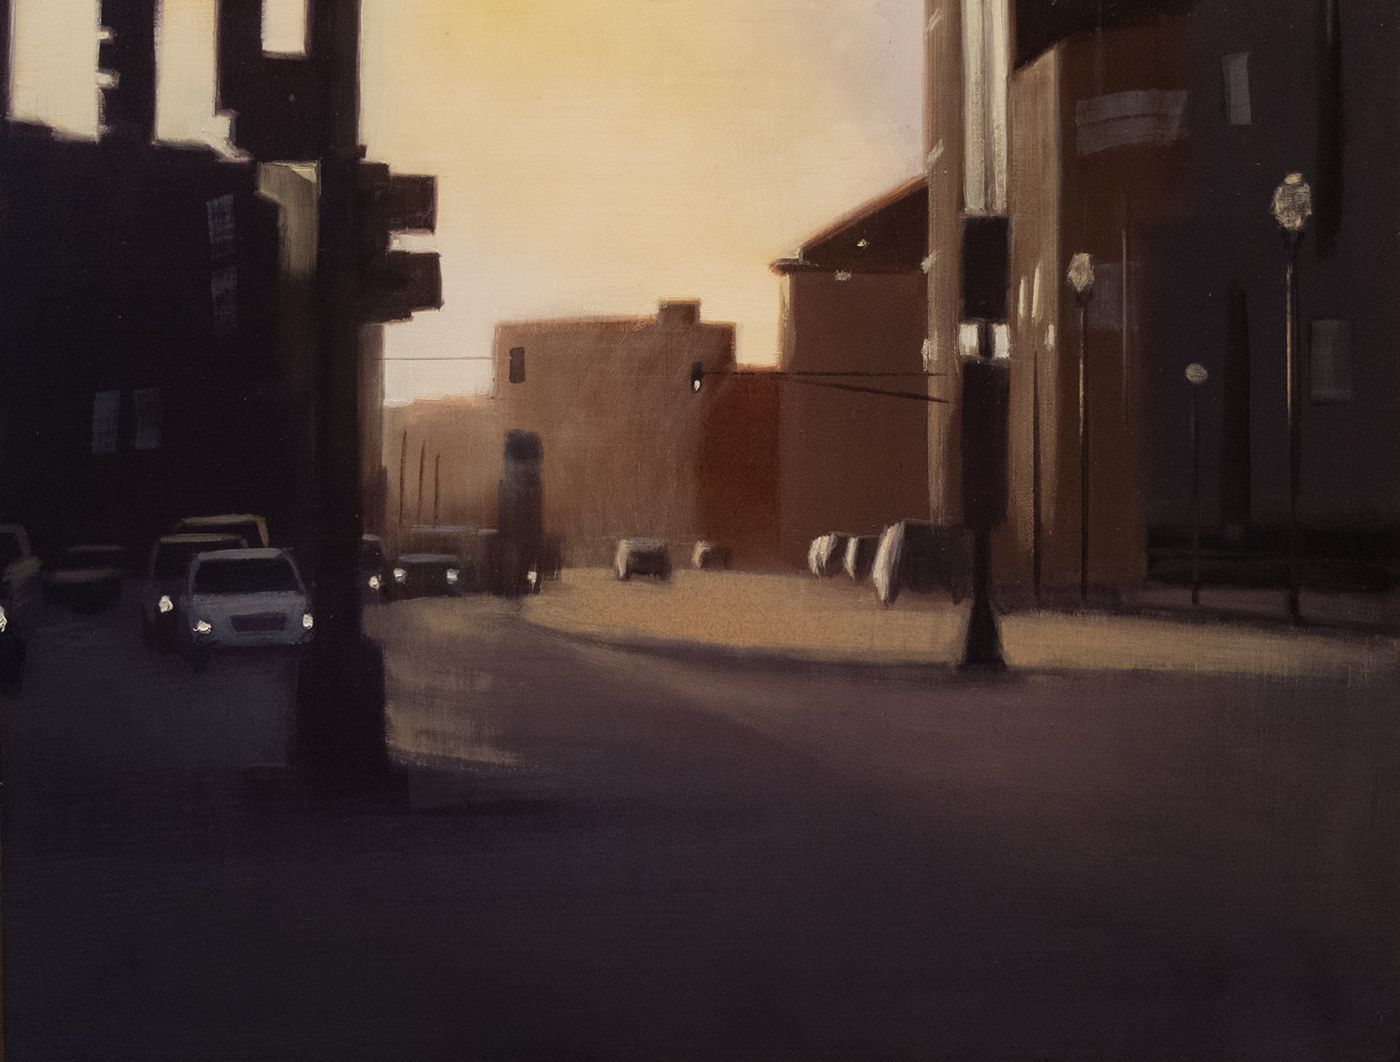 representational realist Realism art oil Urban Street city night